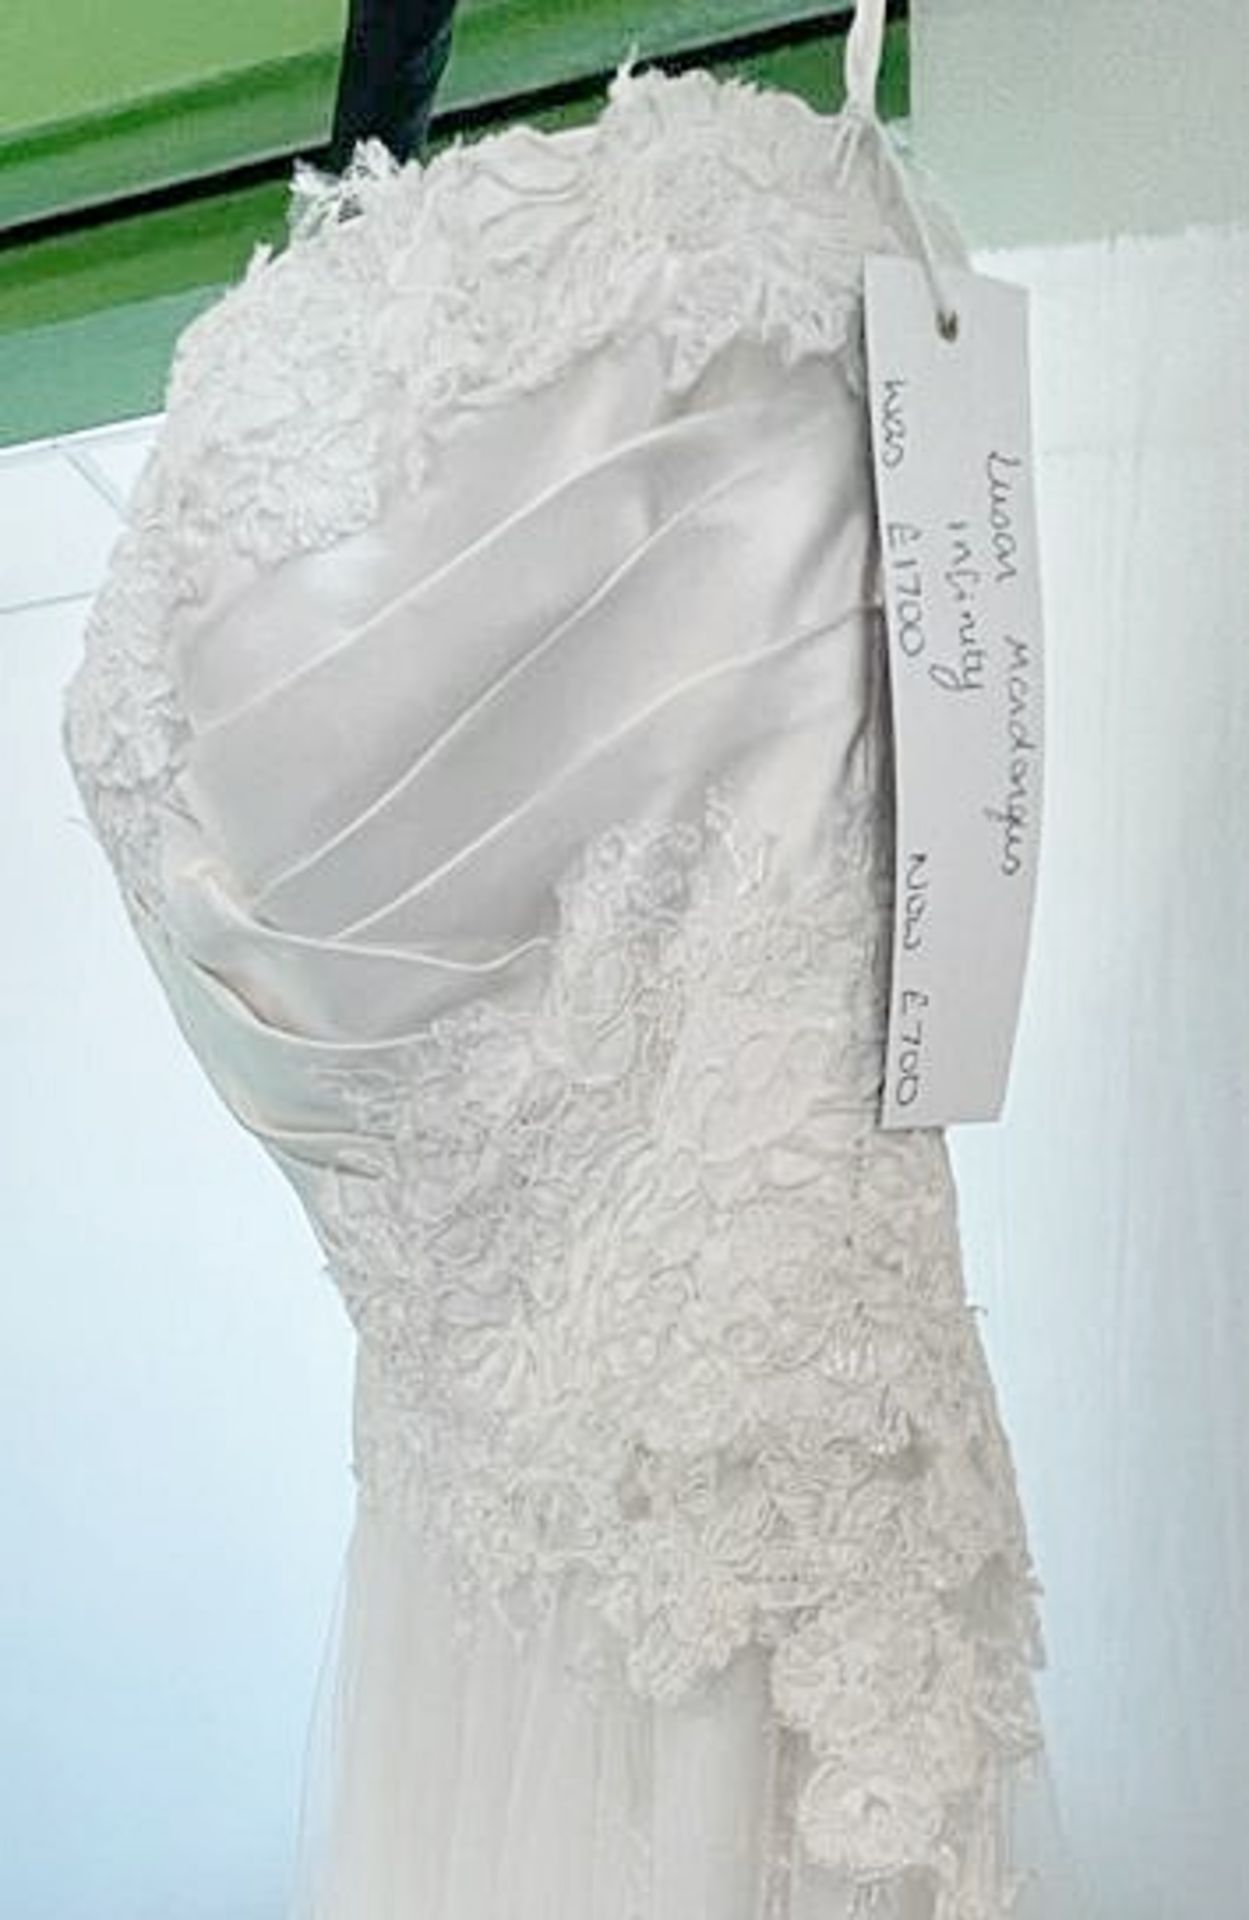 1 x LUSAN MANDONGUS / ANNASUL Y 'Infinity' Strapless Designer Wedding Dress - UK 12 - RRP £1,700 - Image 5 of 8